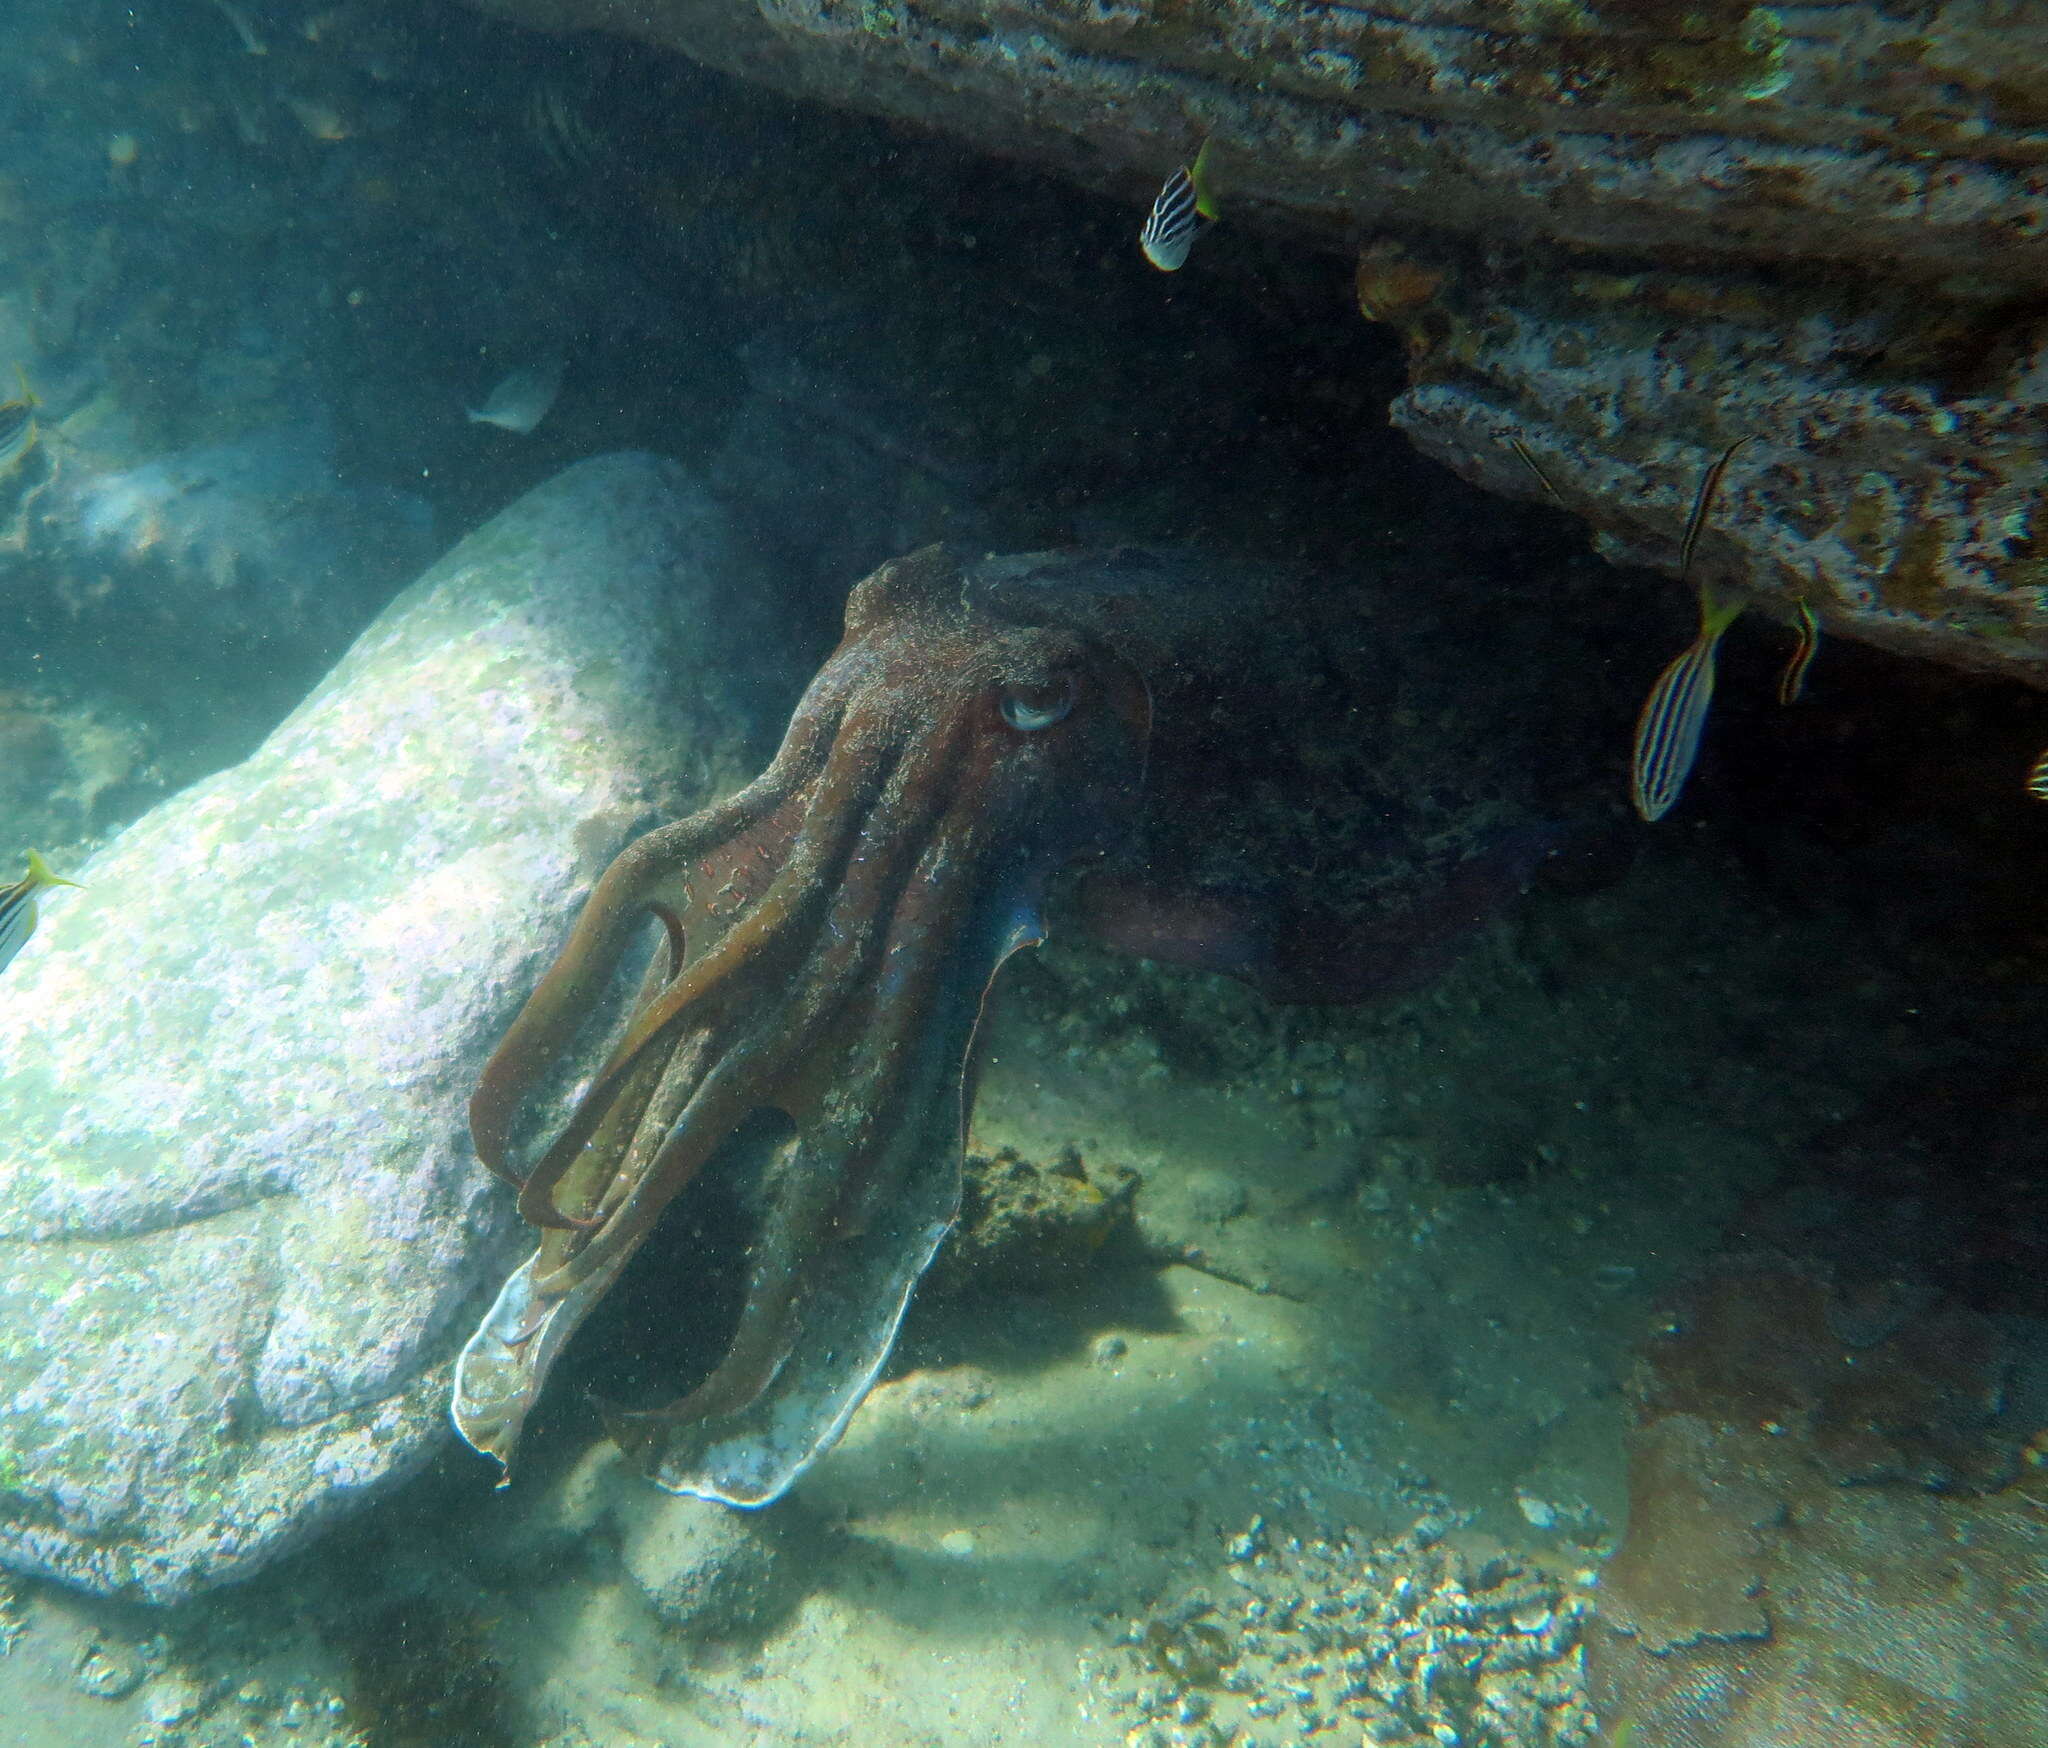 Image of Giant Australian Cuttlefish